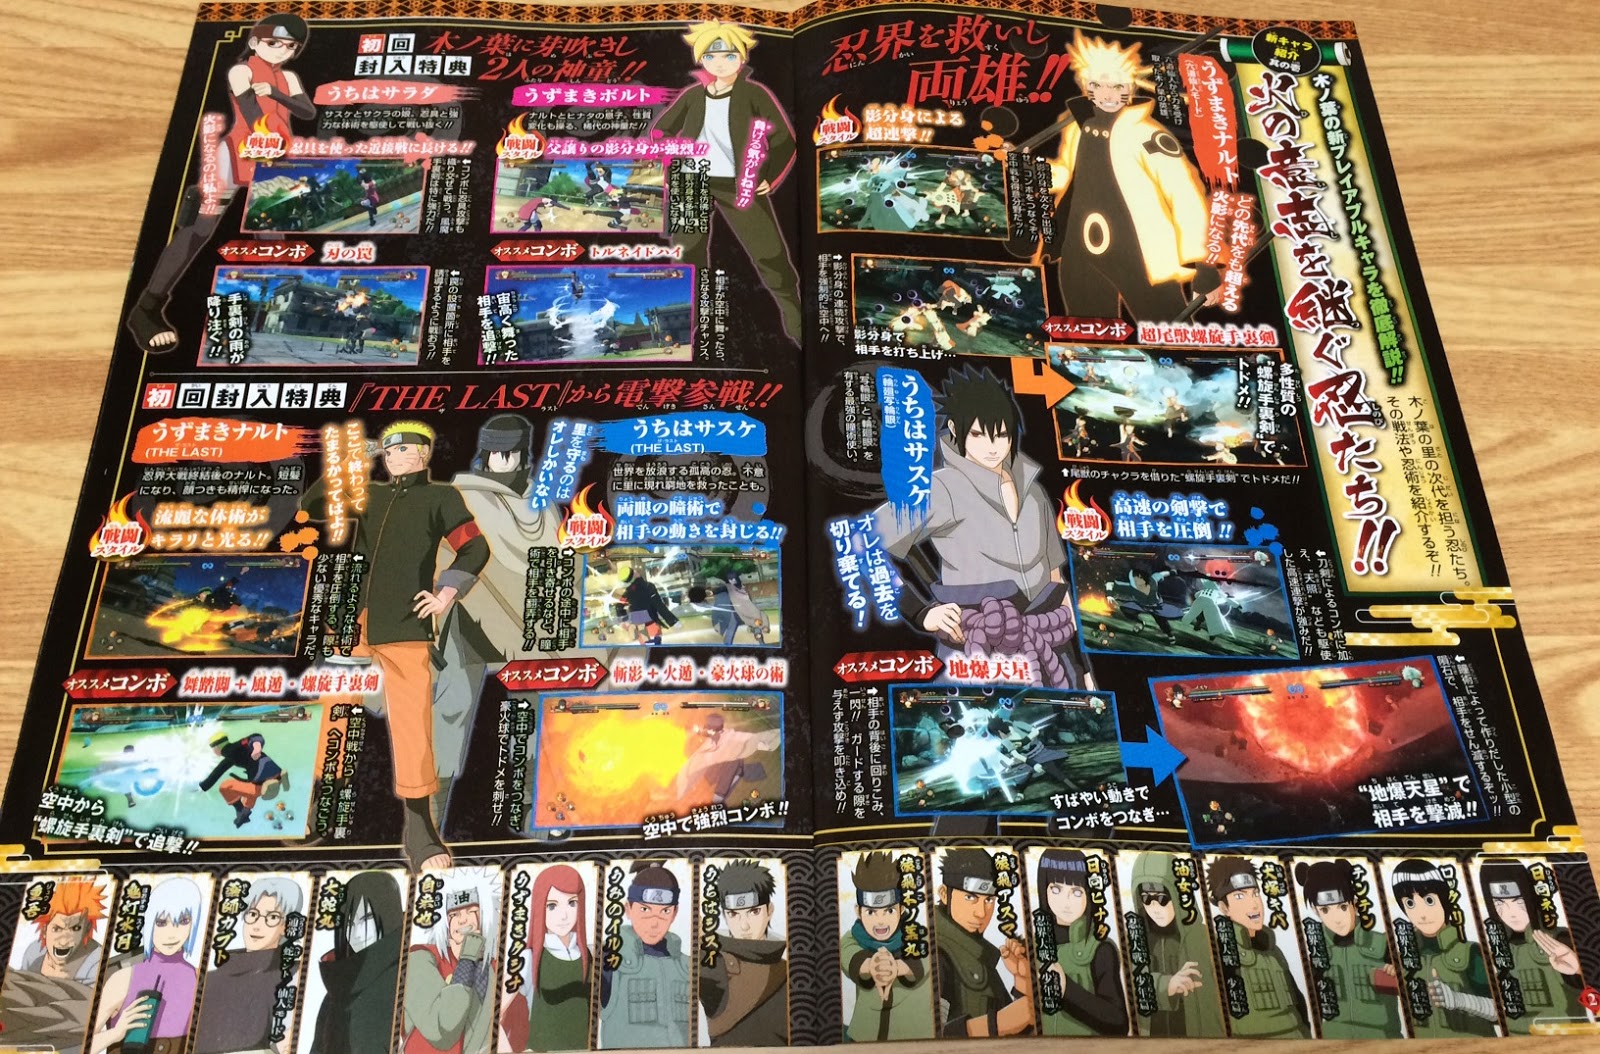 Divulgadas novas imagens de Naruto Shippuden Ultimate Ninja Storm 4 -  Página 9 de 9 - Combo Infinito